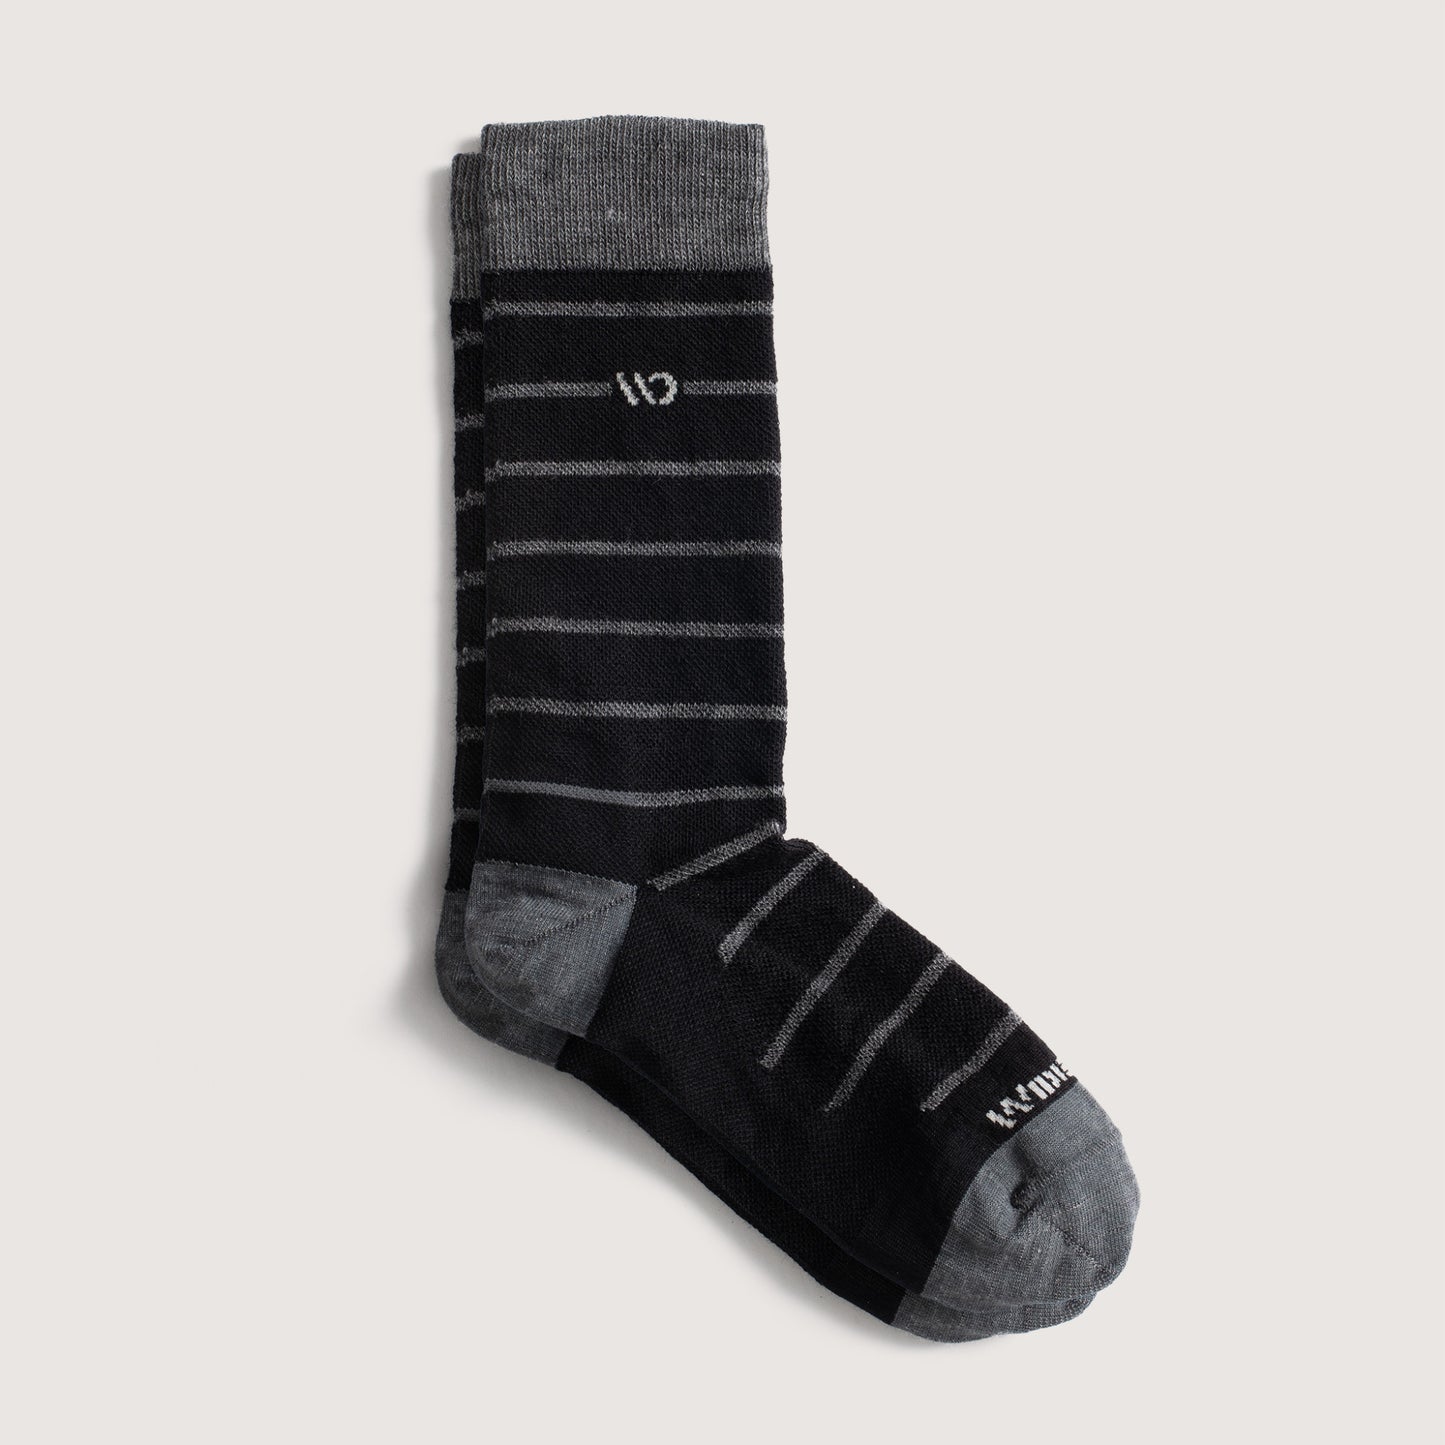 Crew socks wiith gray heel/toe, white logo, black body, and gray stripes --Black